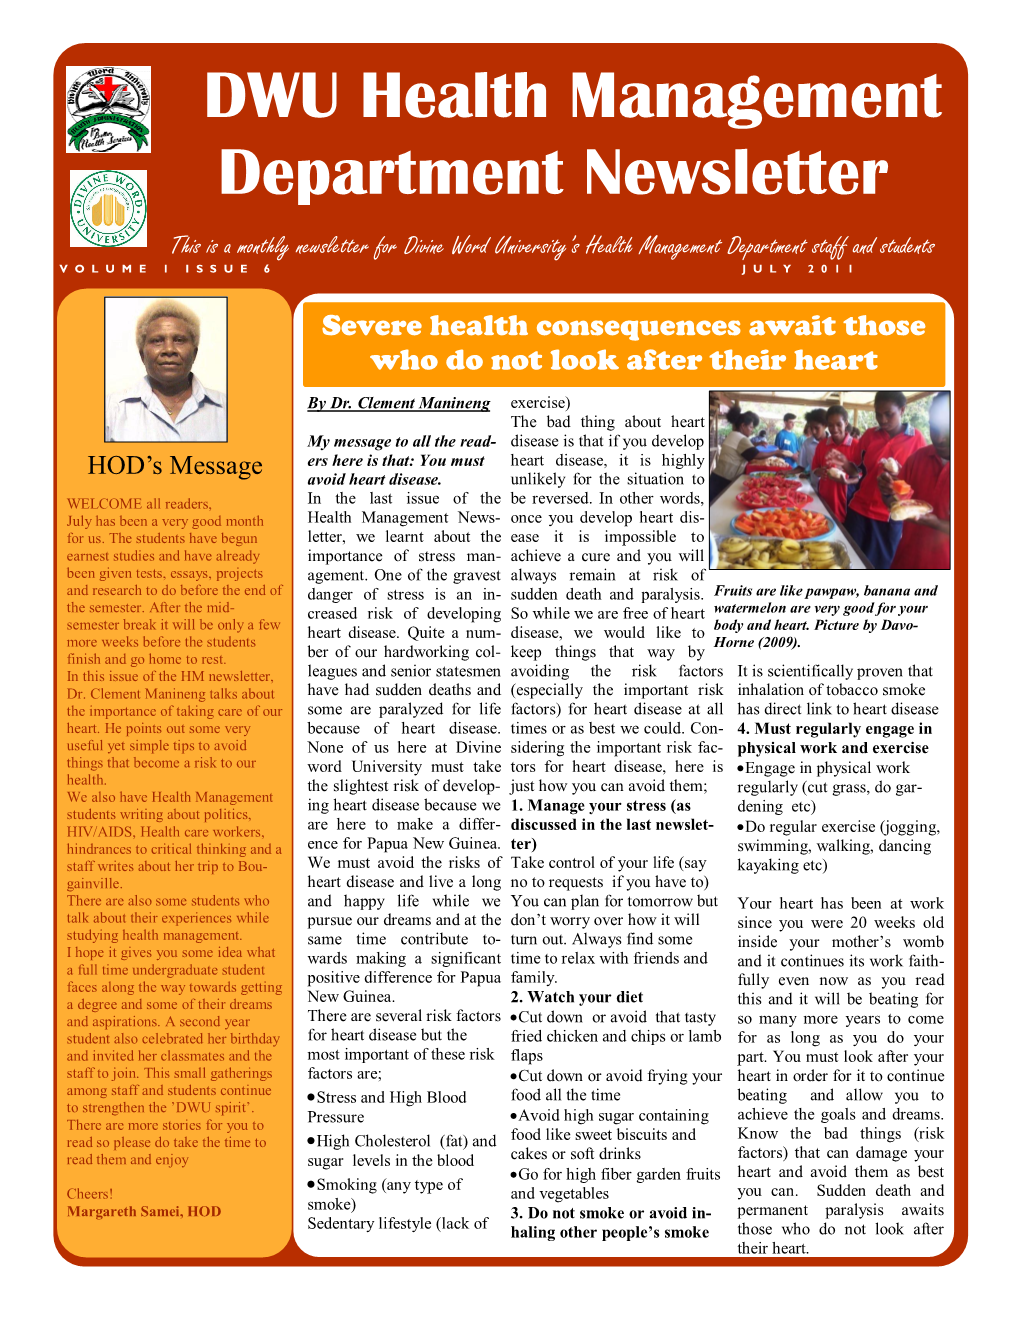 DWU Health Management Department Newsletter